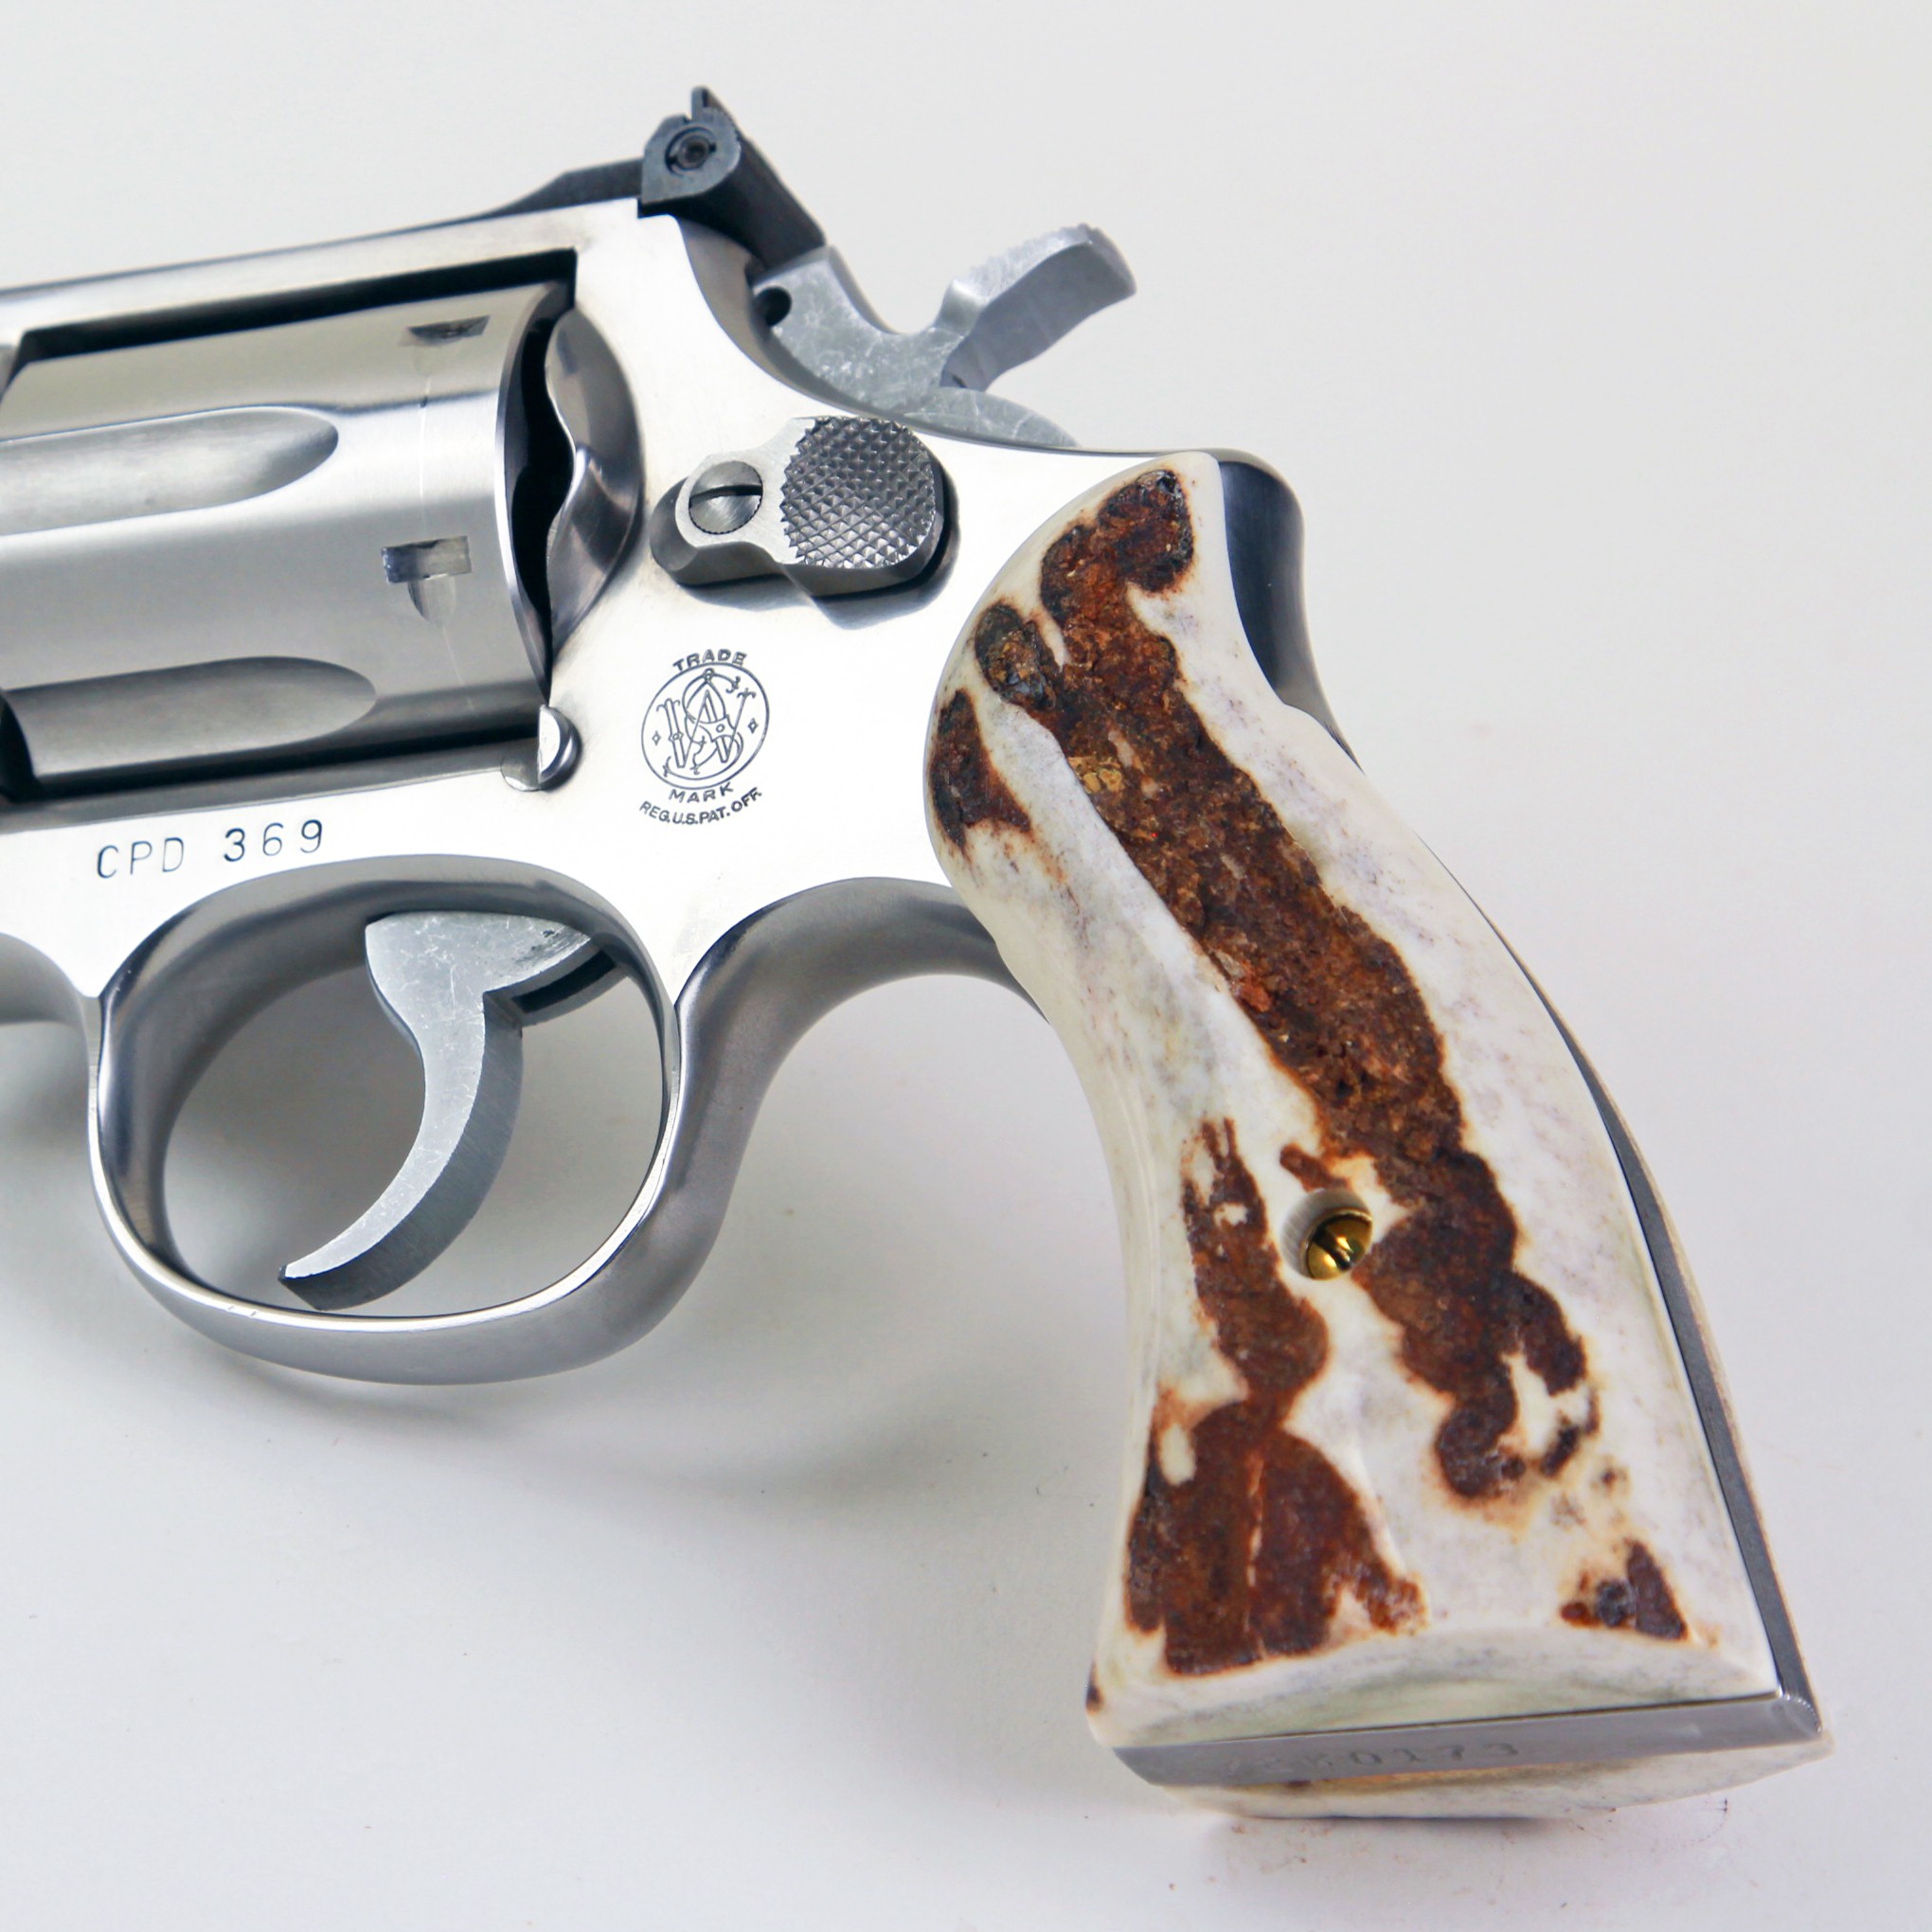 Smith & Wesson K & L Frame Roundbutt Grips 